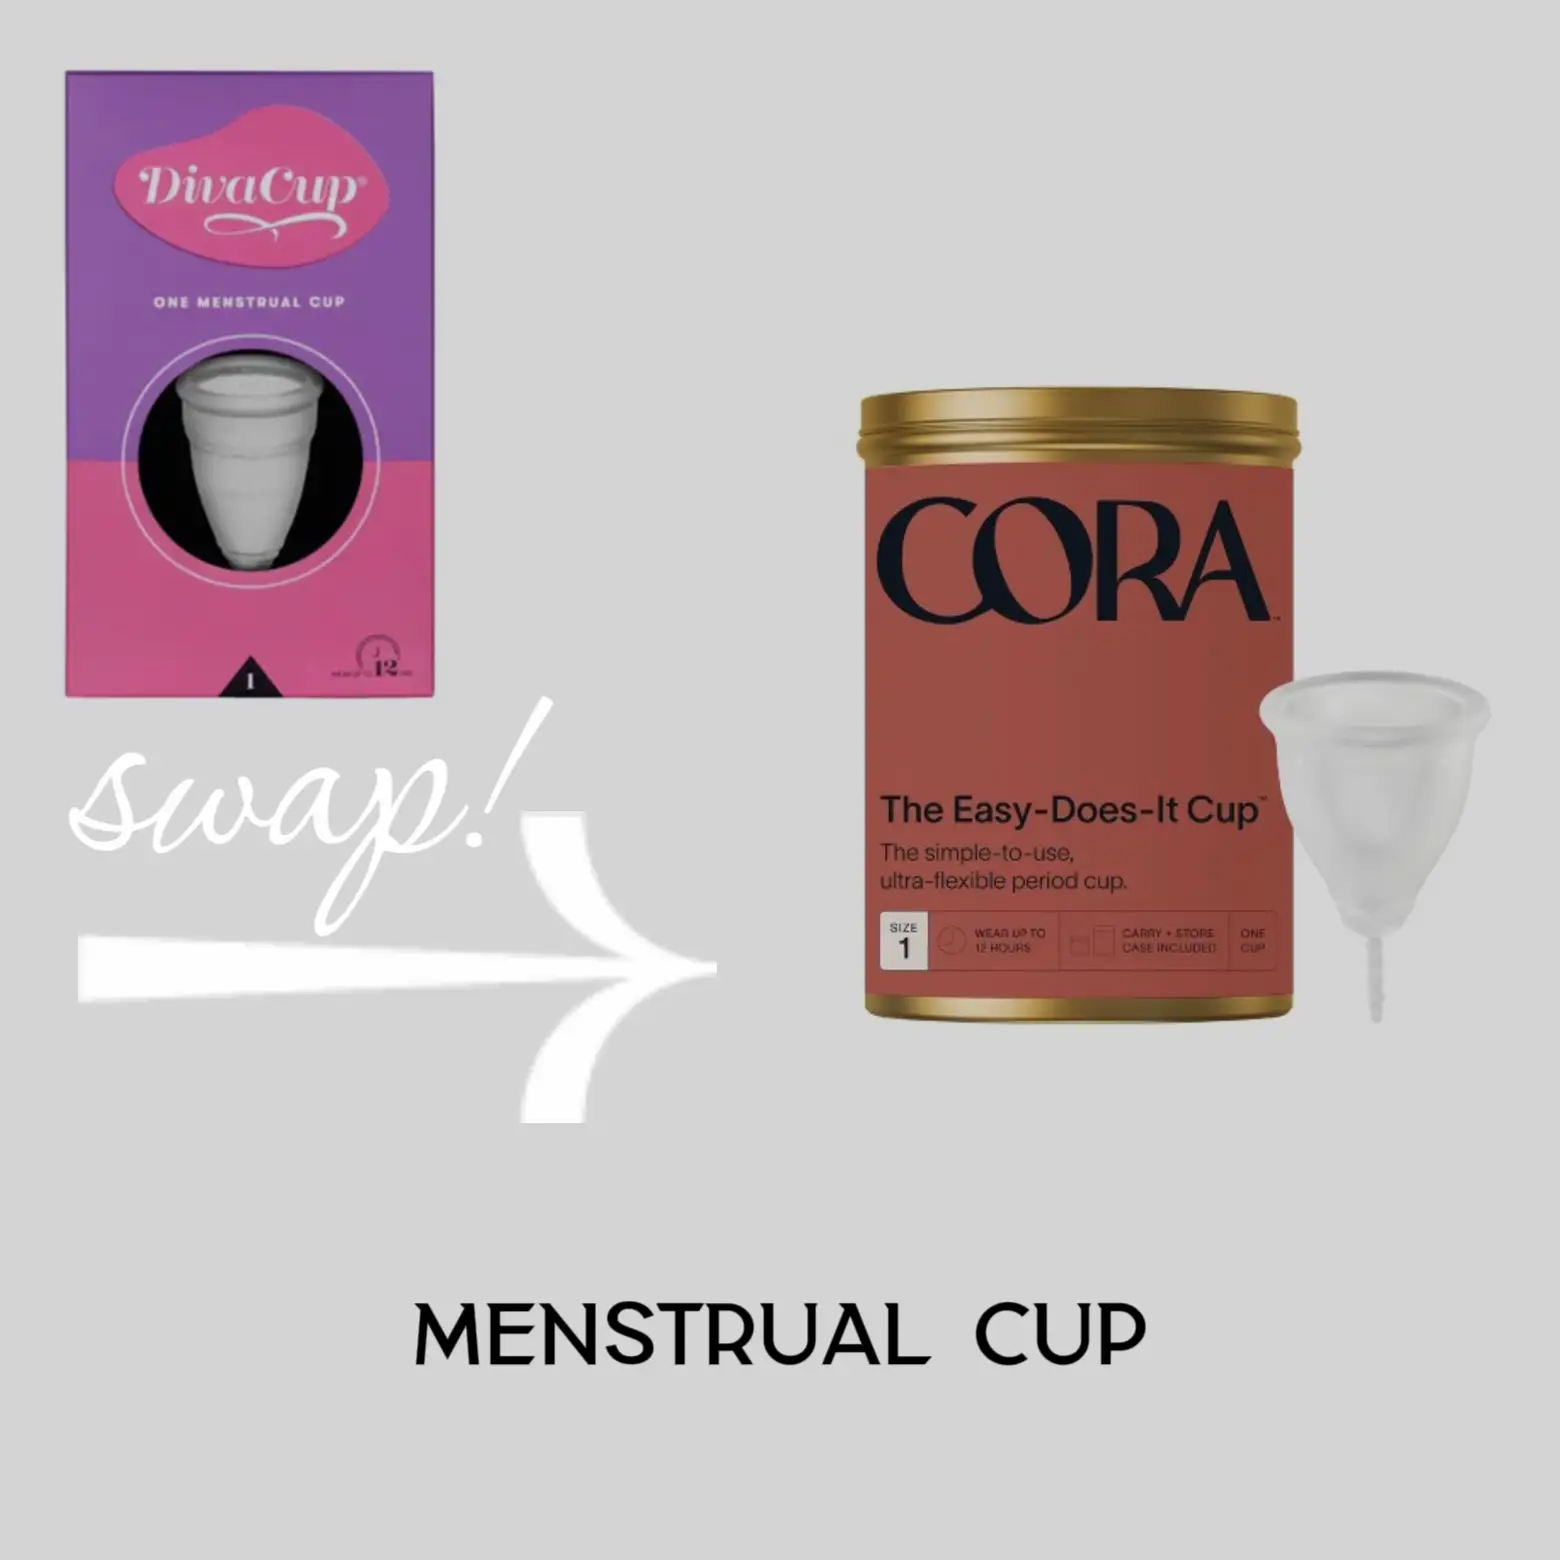 menstrual care - Lemon8 Search